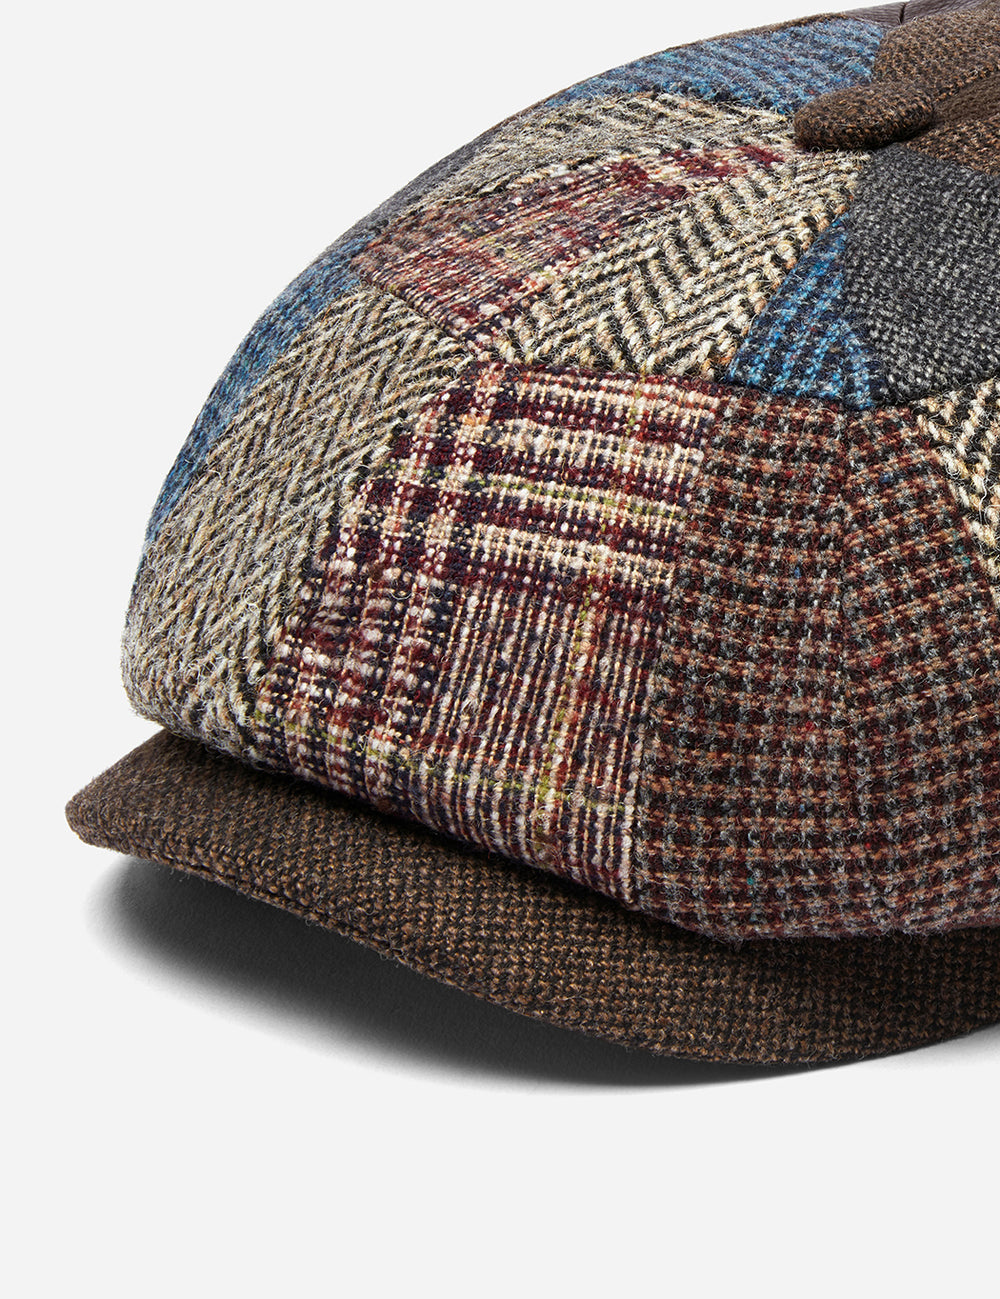 Stetson Patchwork Hats for Men